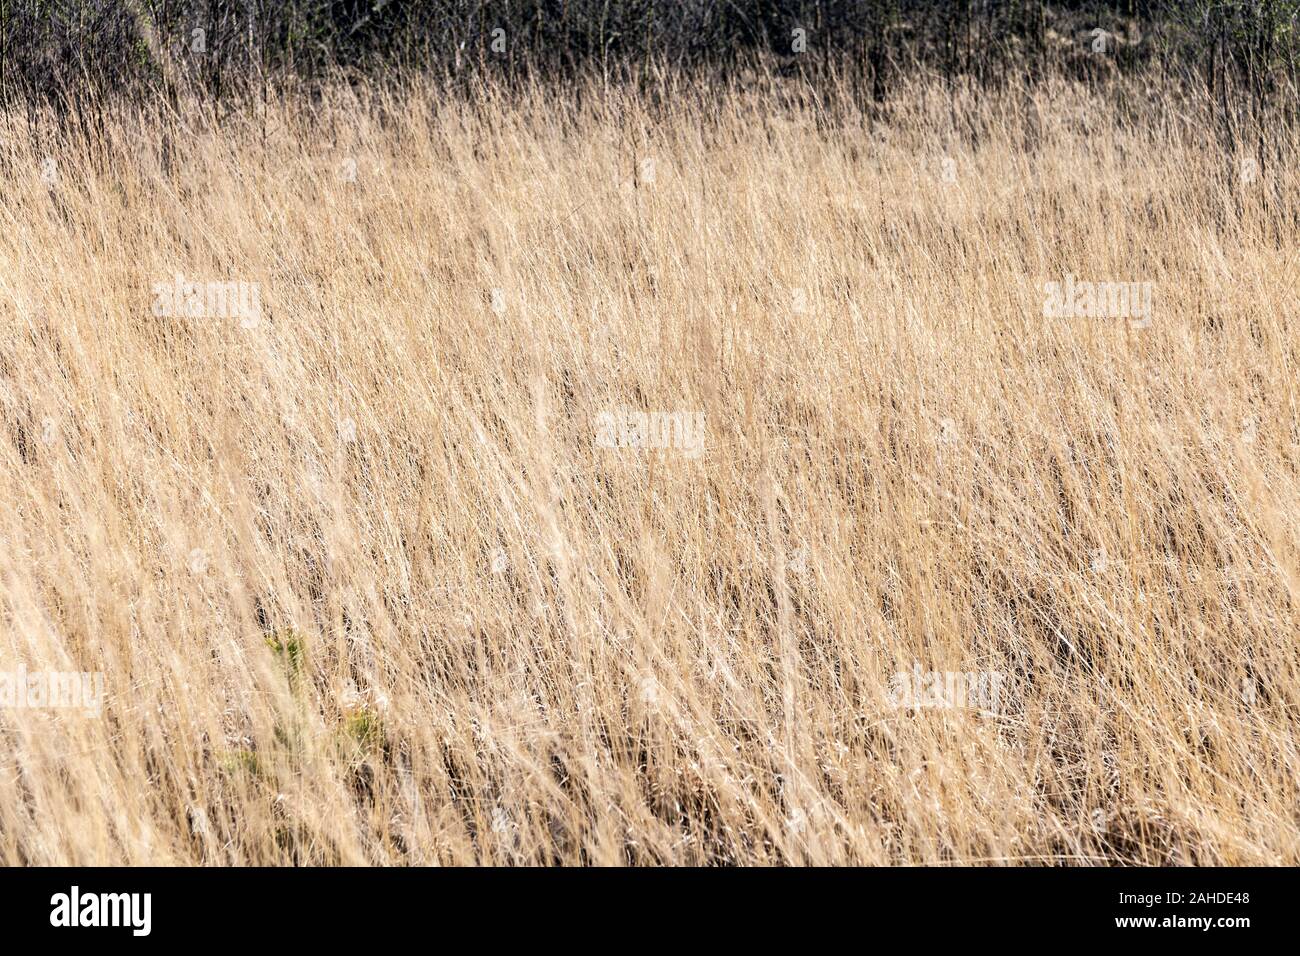 Drey gelbes Gras im Kalmthout Nationalpark, Belgien Stockfoto